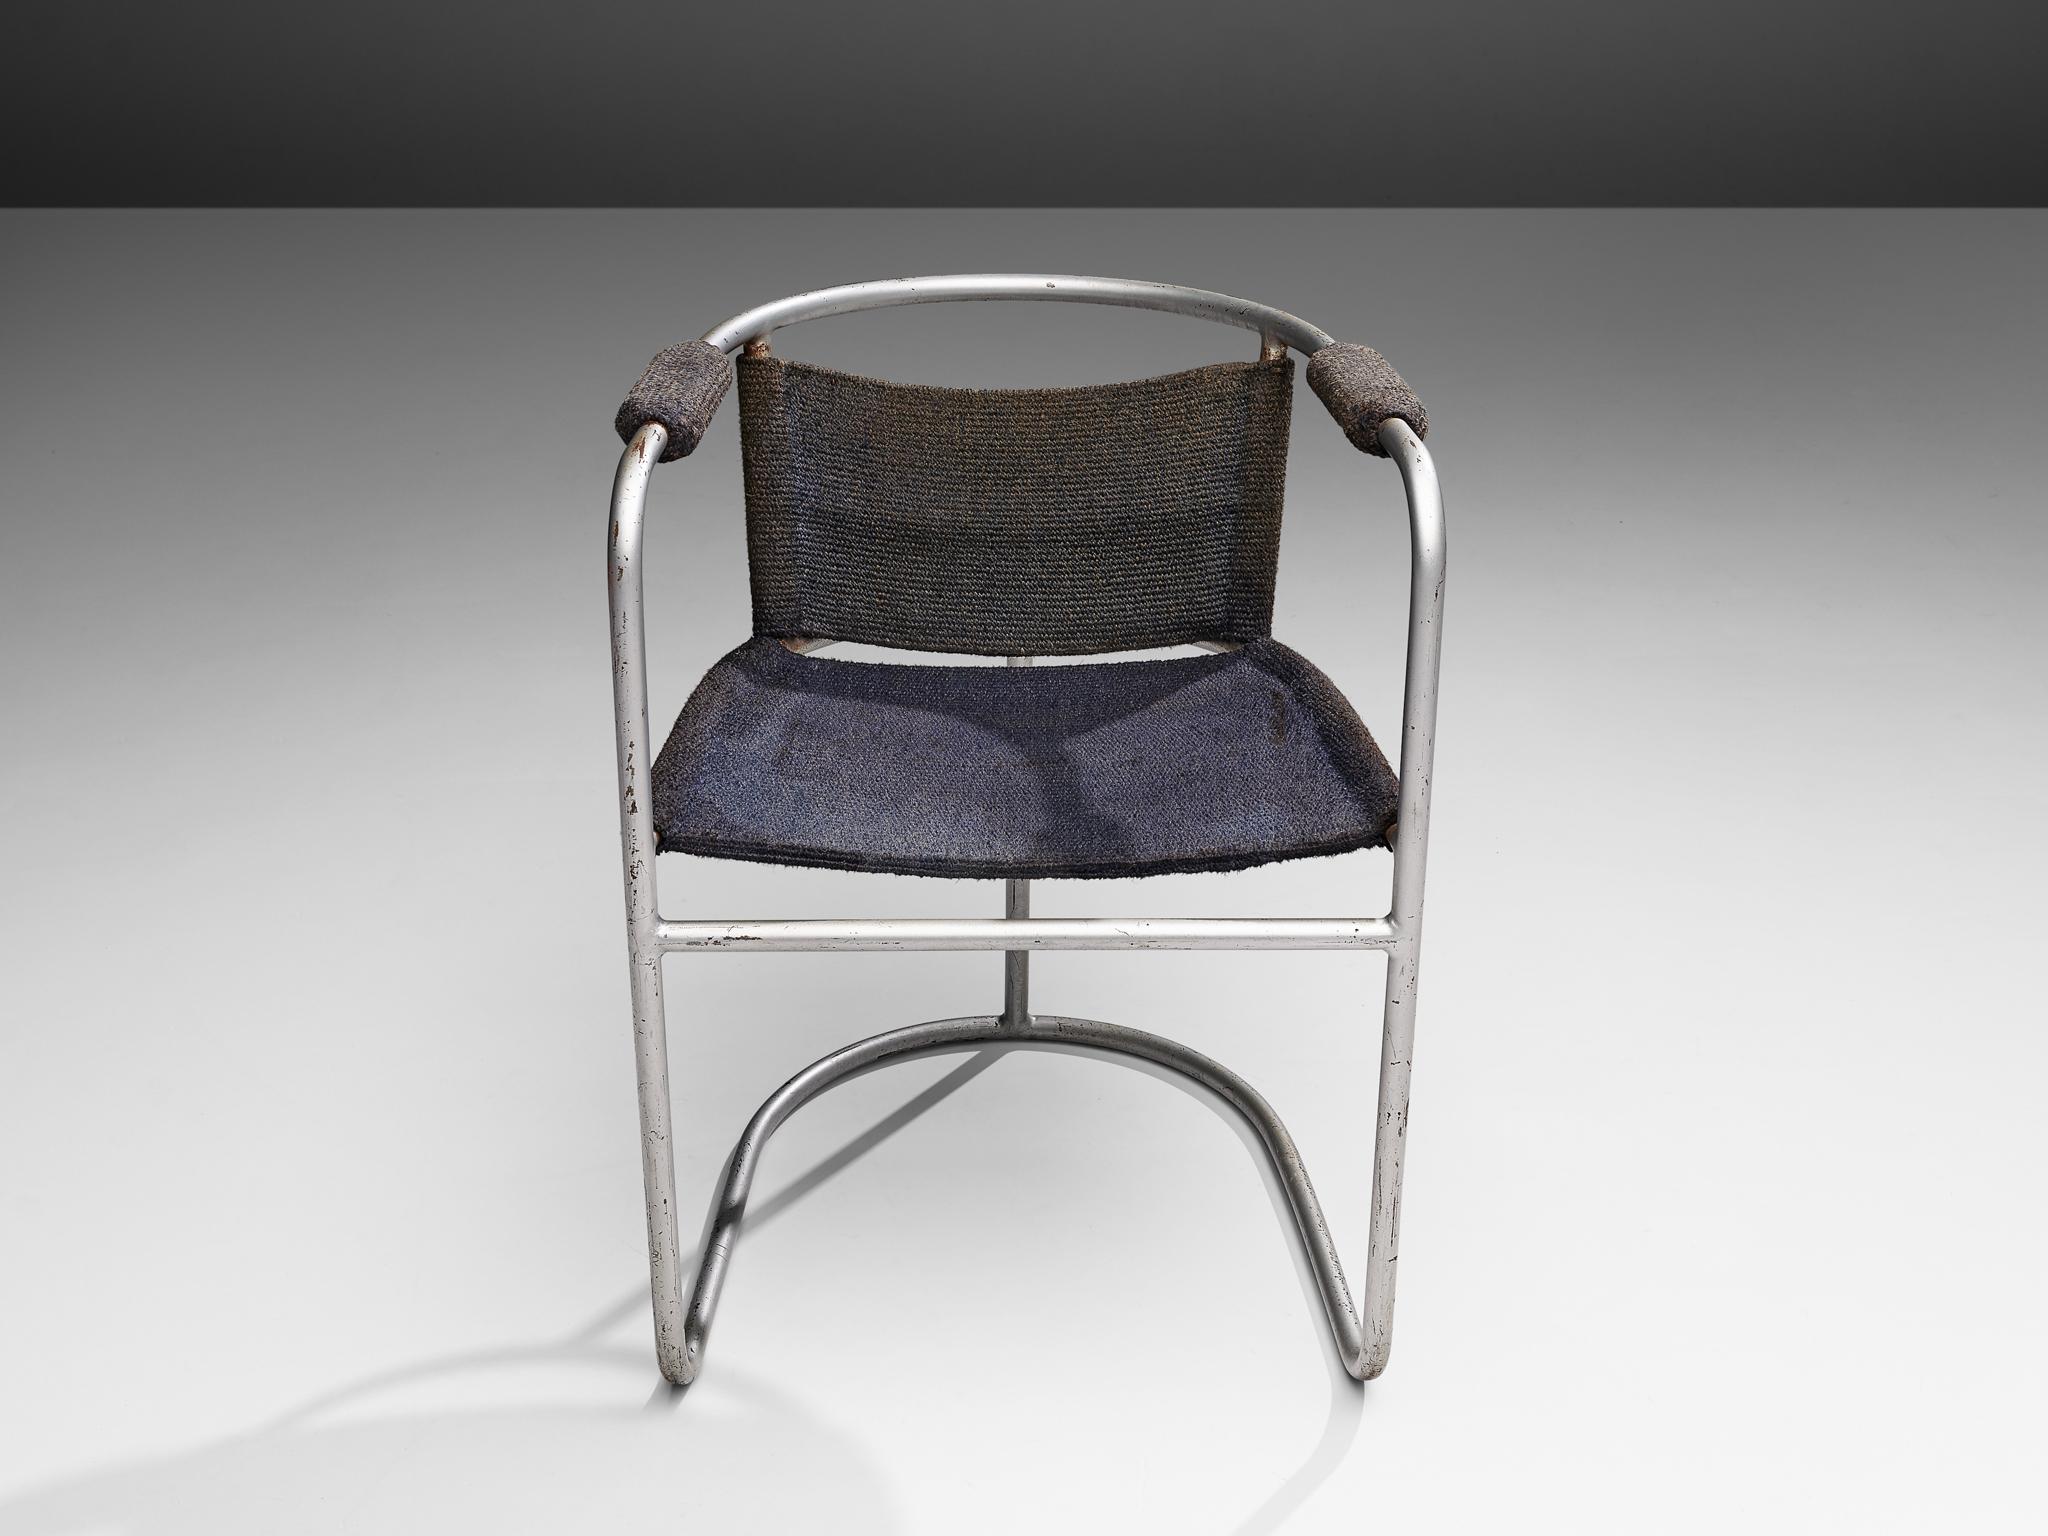 Natural Fiber Bas Van Pelt Early Tubular Steel Chair with Blue Grey Sisal Seating For Sale